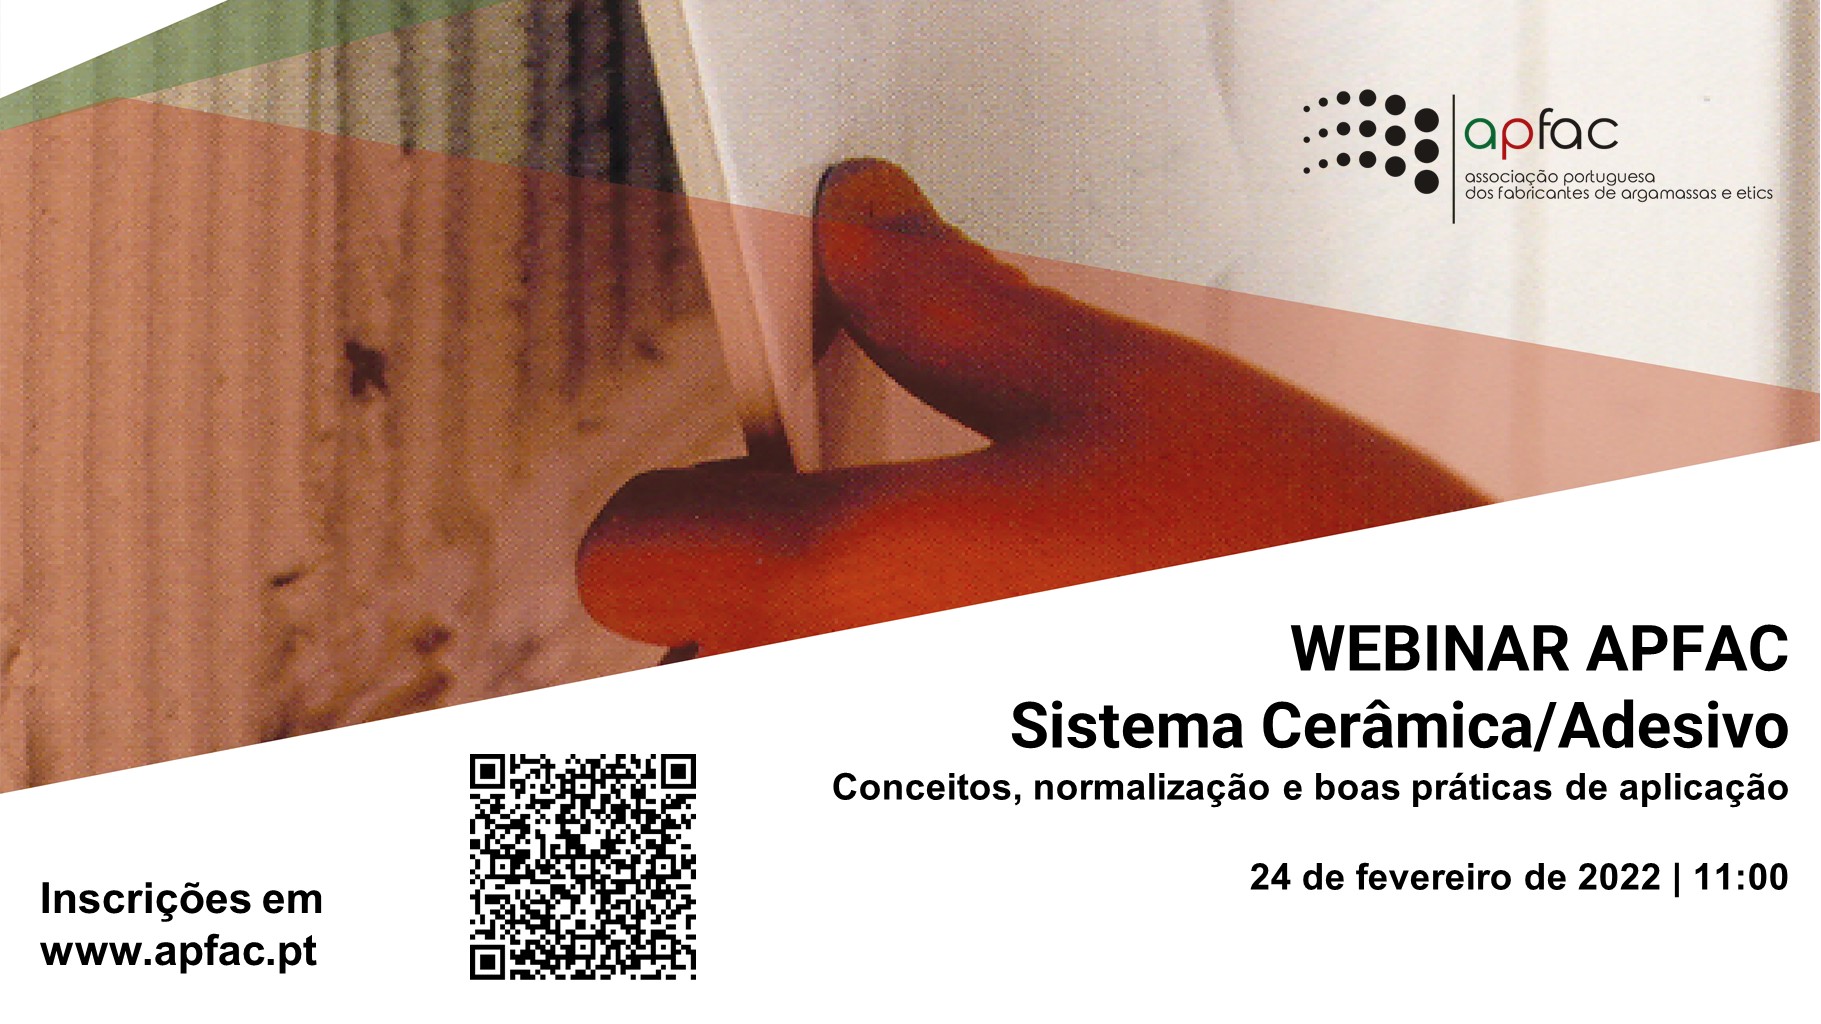 WEBINARS APFAC - SISTEMA CERÂMICA/ADESIVO